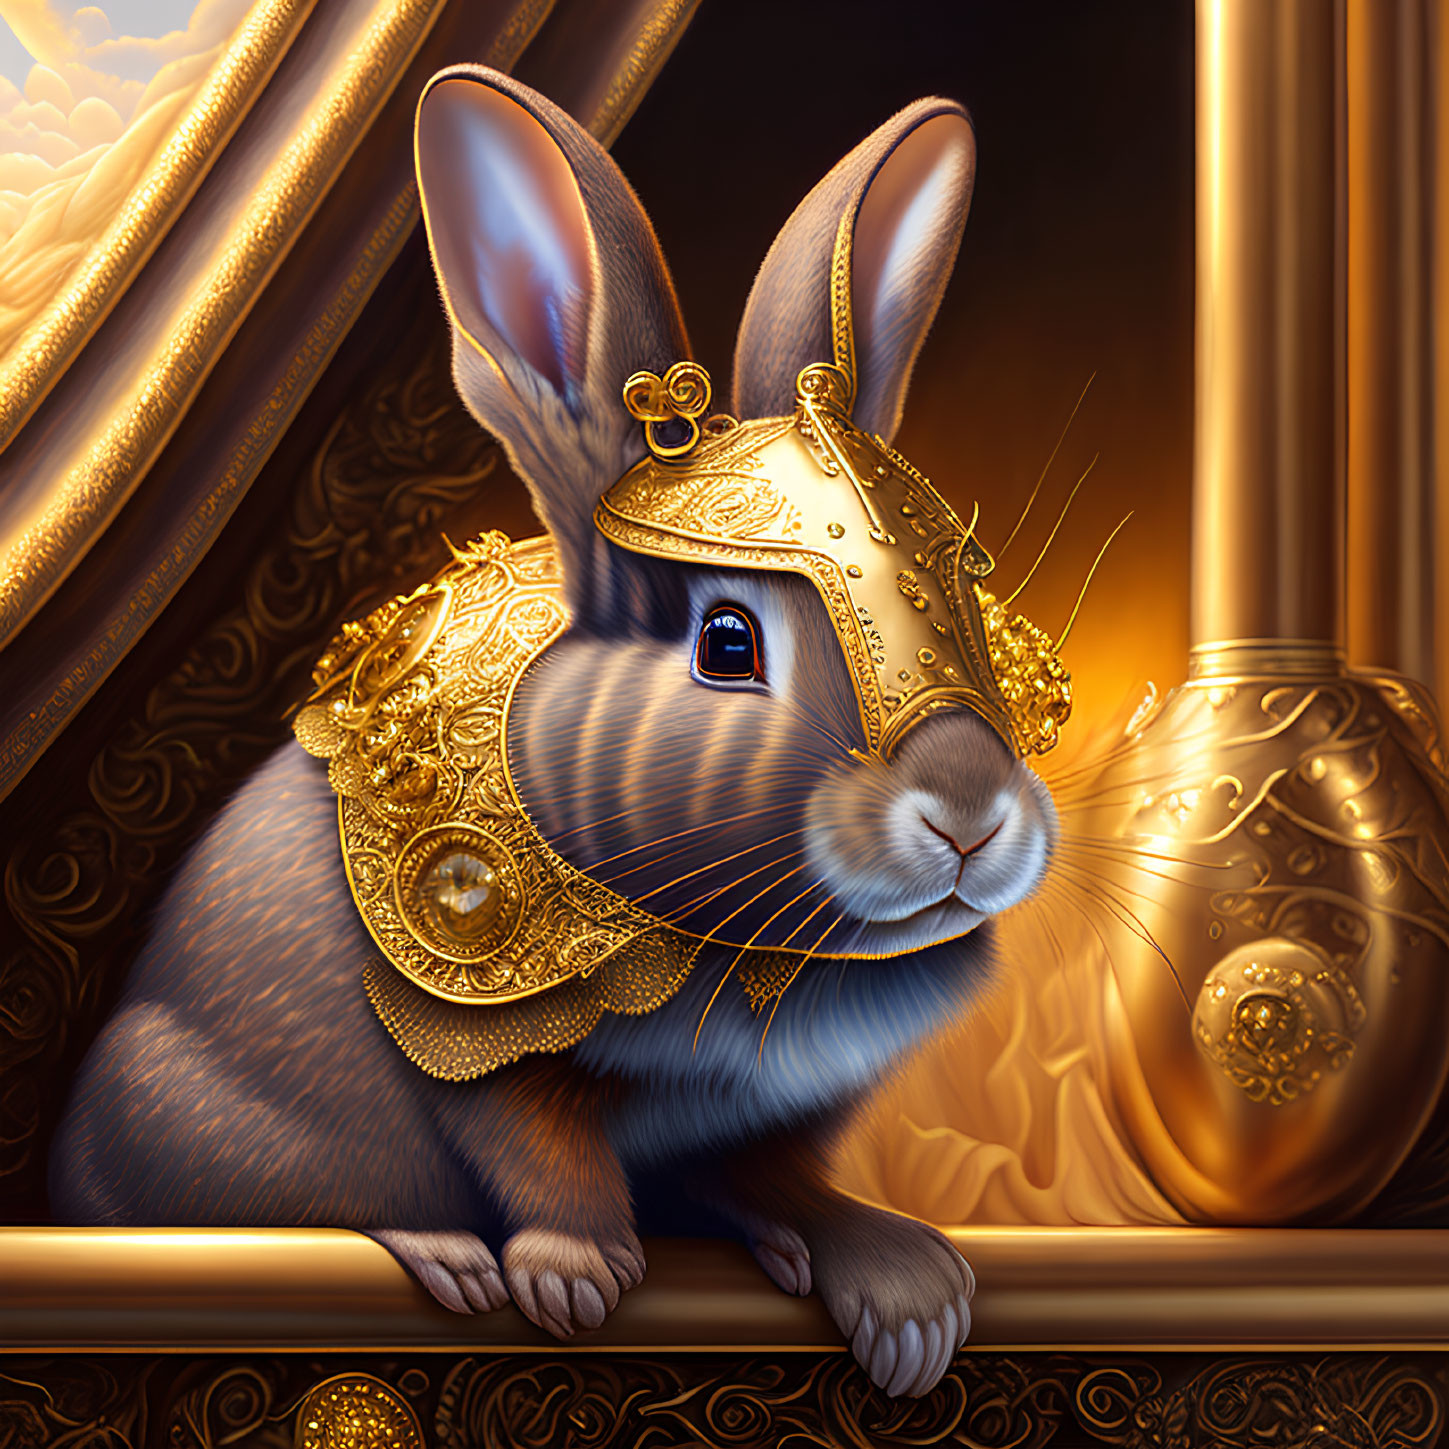 Regal rabbit in golden armor against lavish backdrop